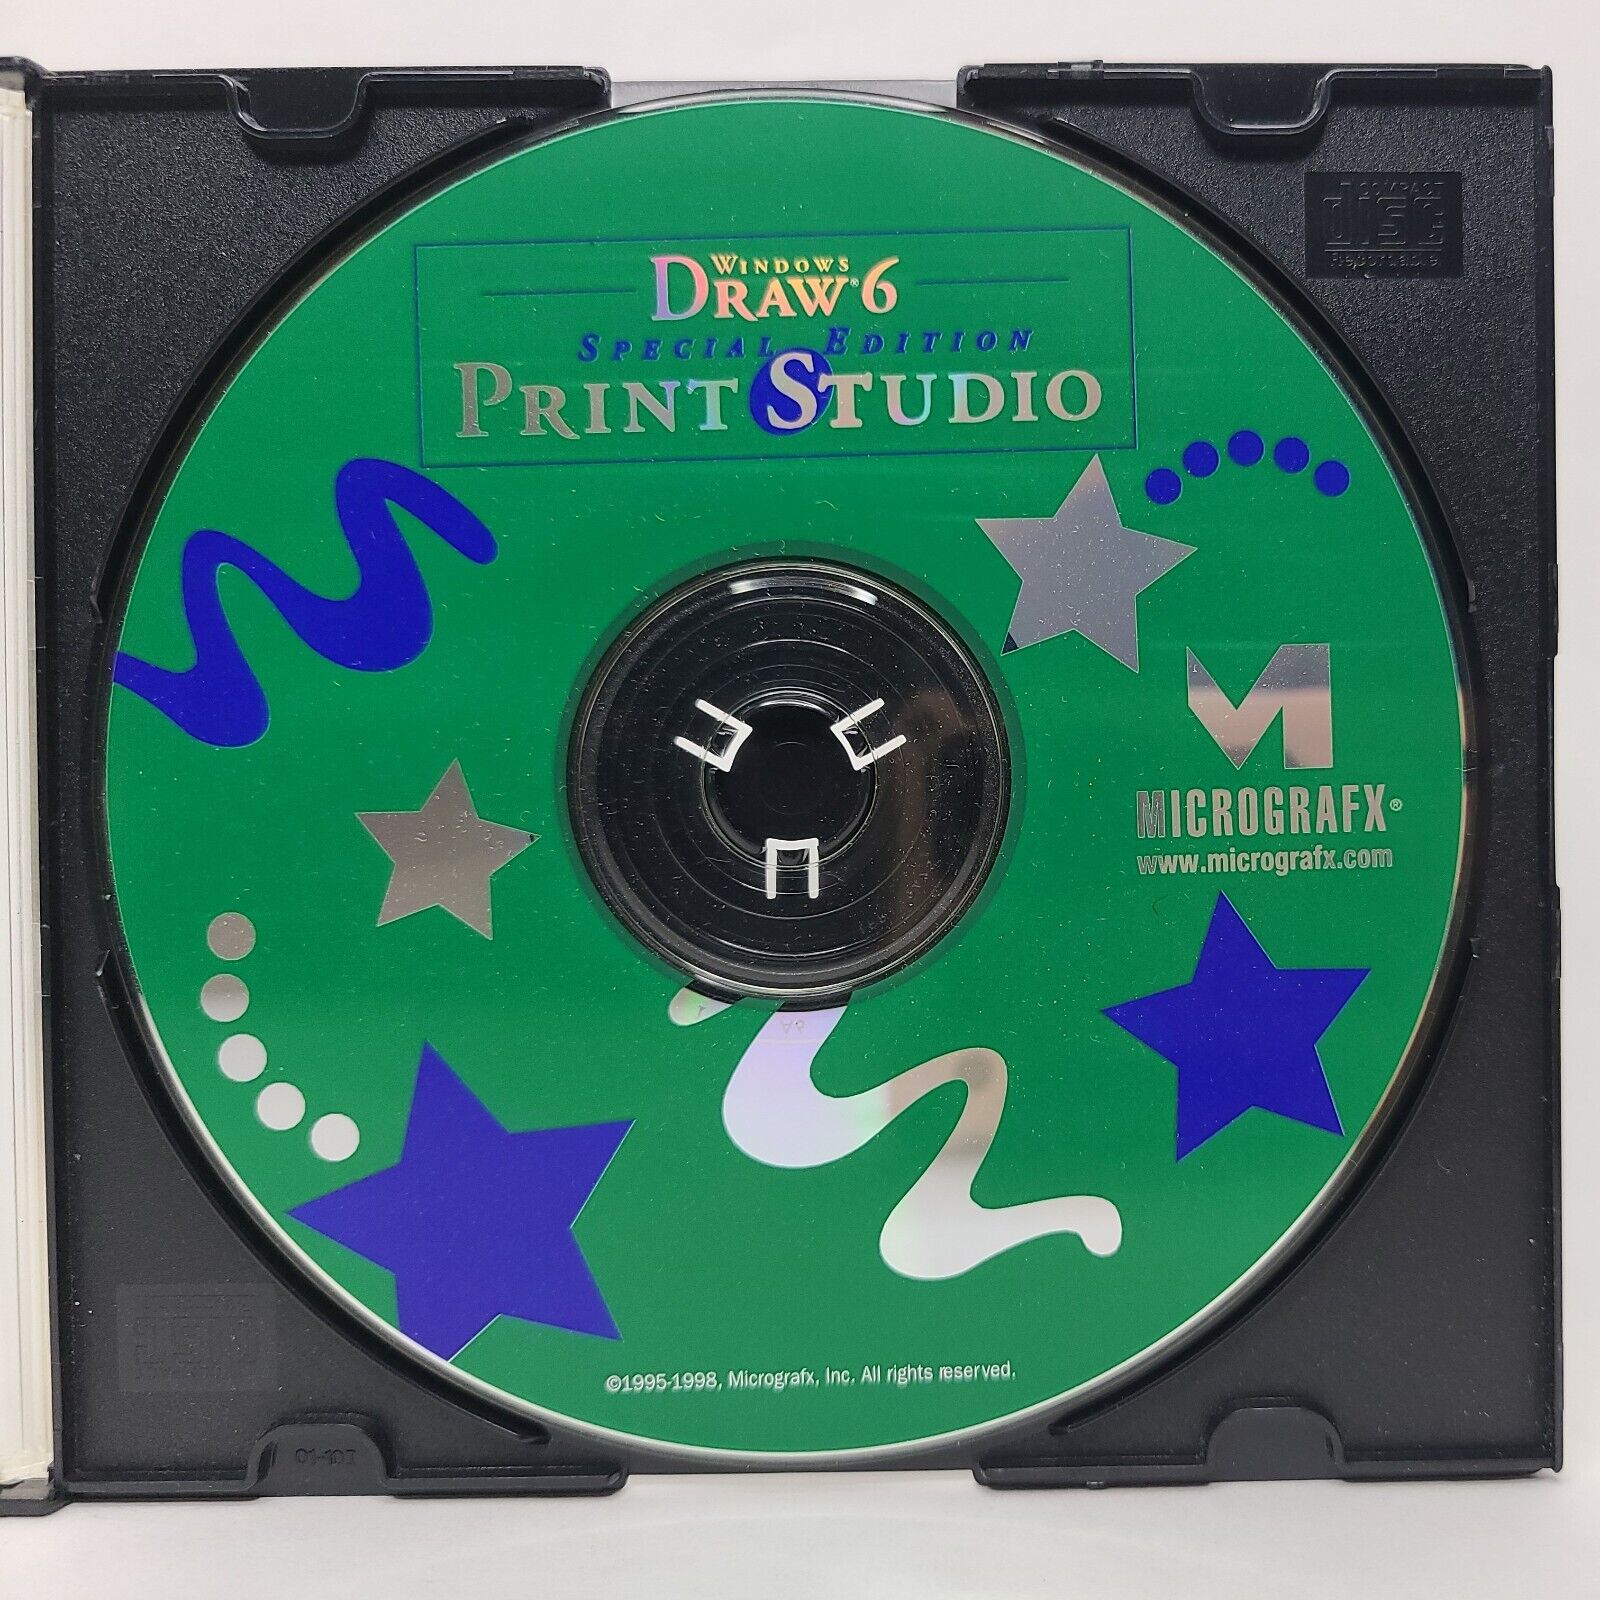 Windows Draw 6 Print Studio Special Edition PC CD-ROM 1998 Micrografx VERY GOOD+